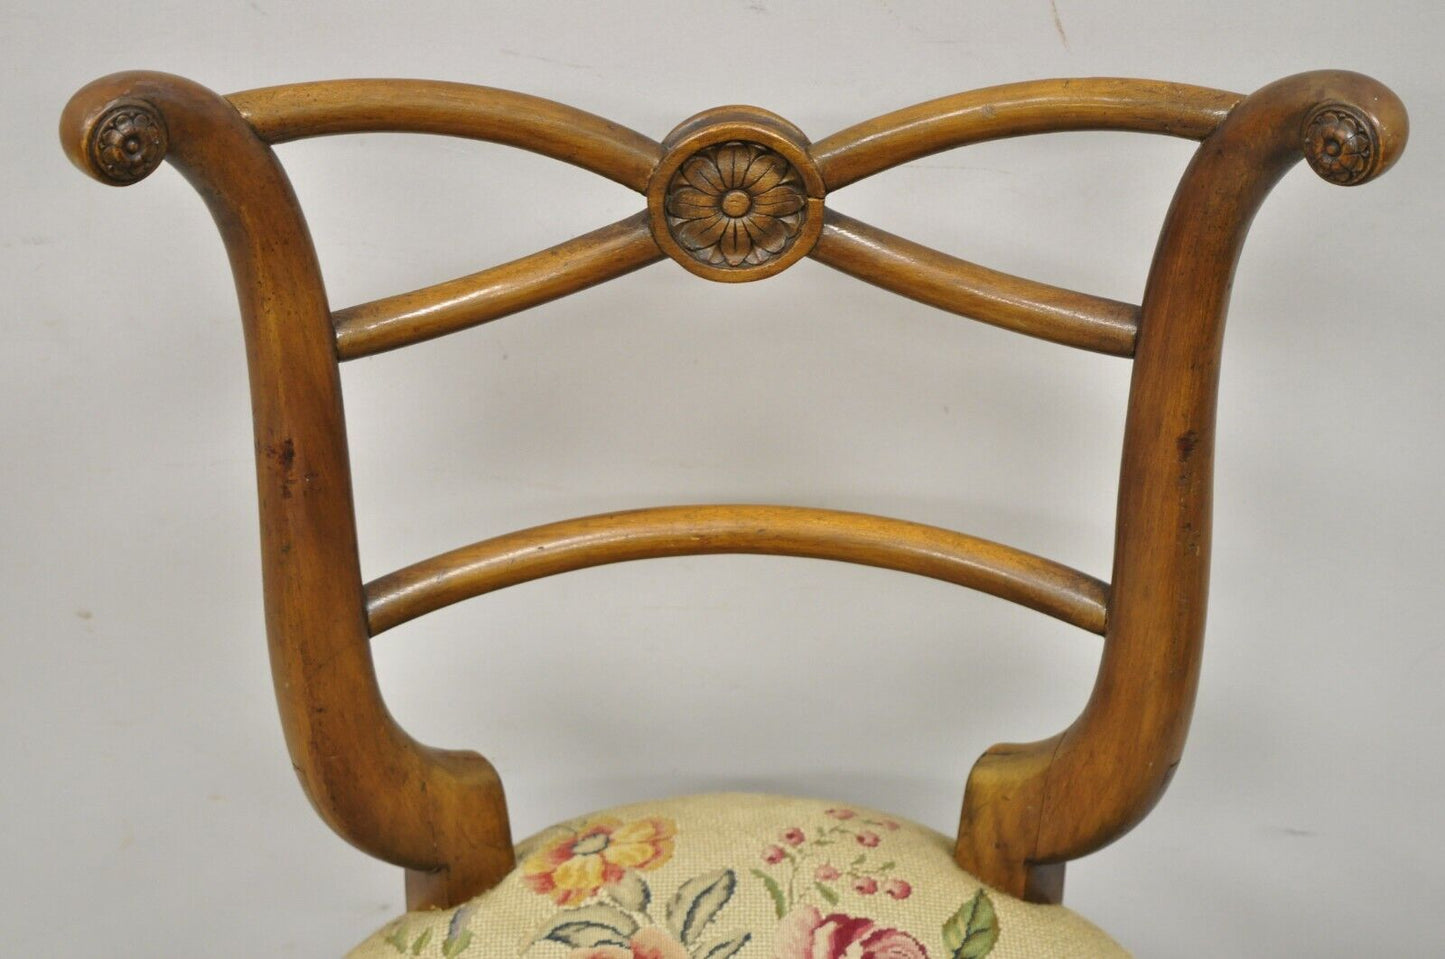 Vintage Italian Biedermeier Saber Leg Accent Side Chair with Needlepoint Seat